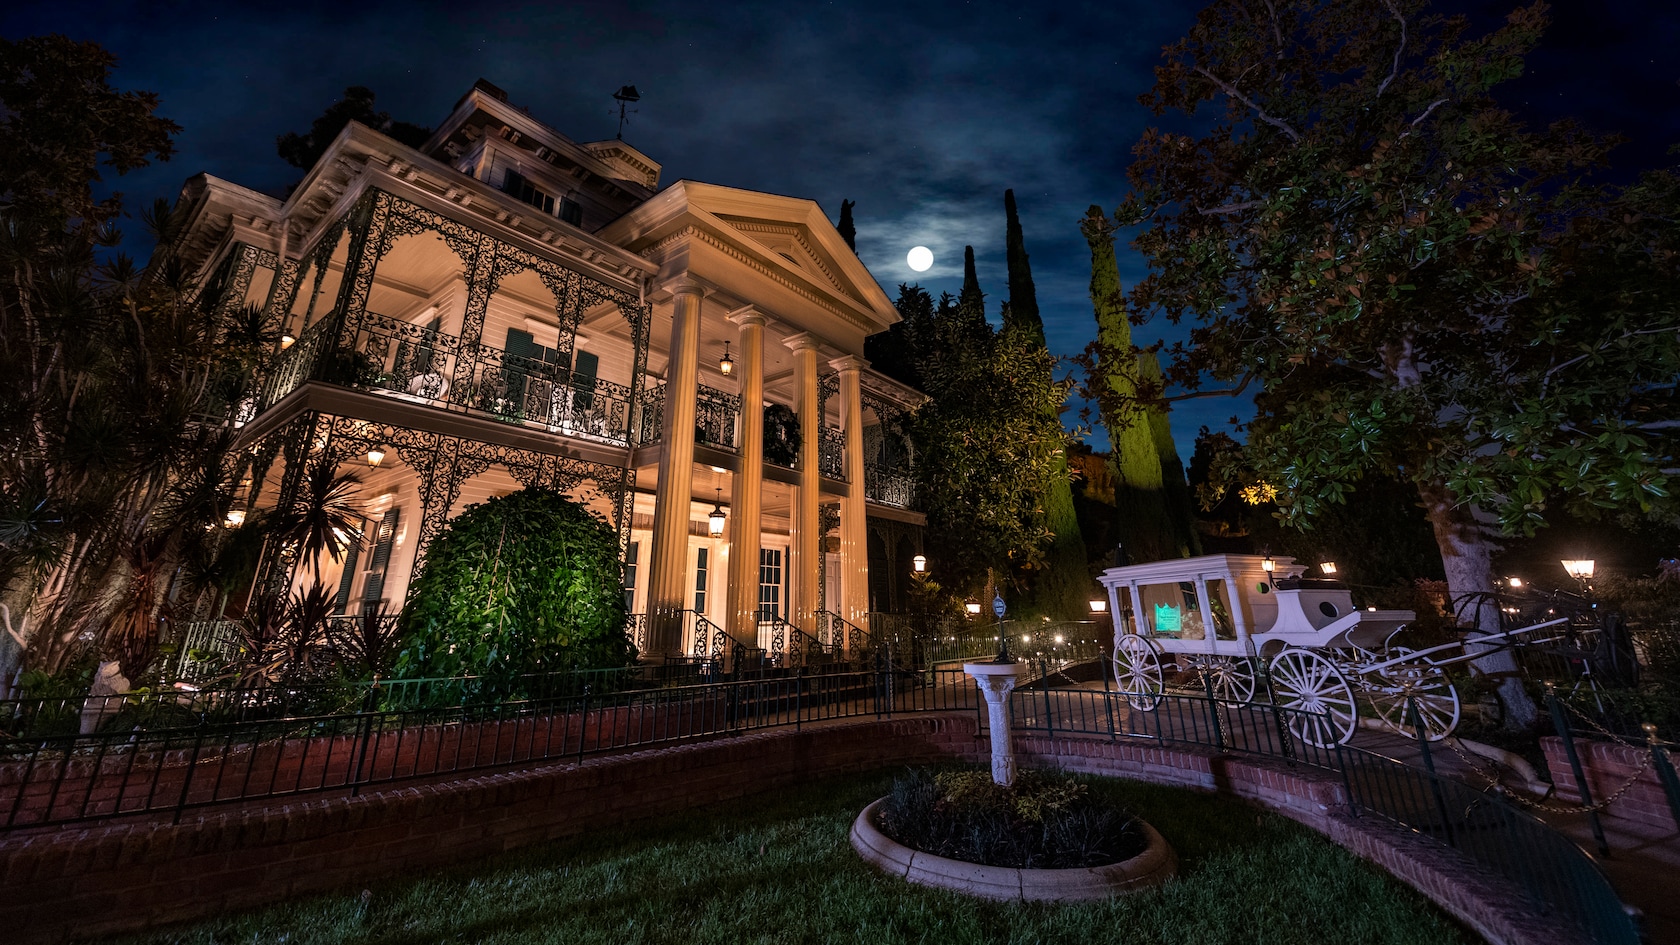 Haunted Mansion at Disneyland Park at the Disneyland Resort